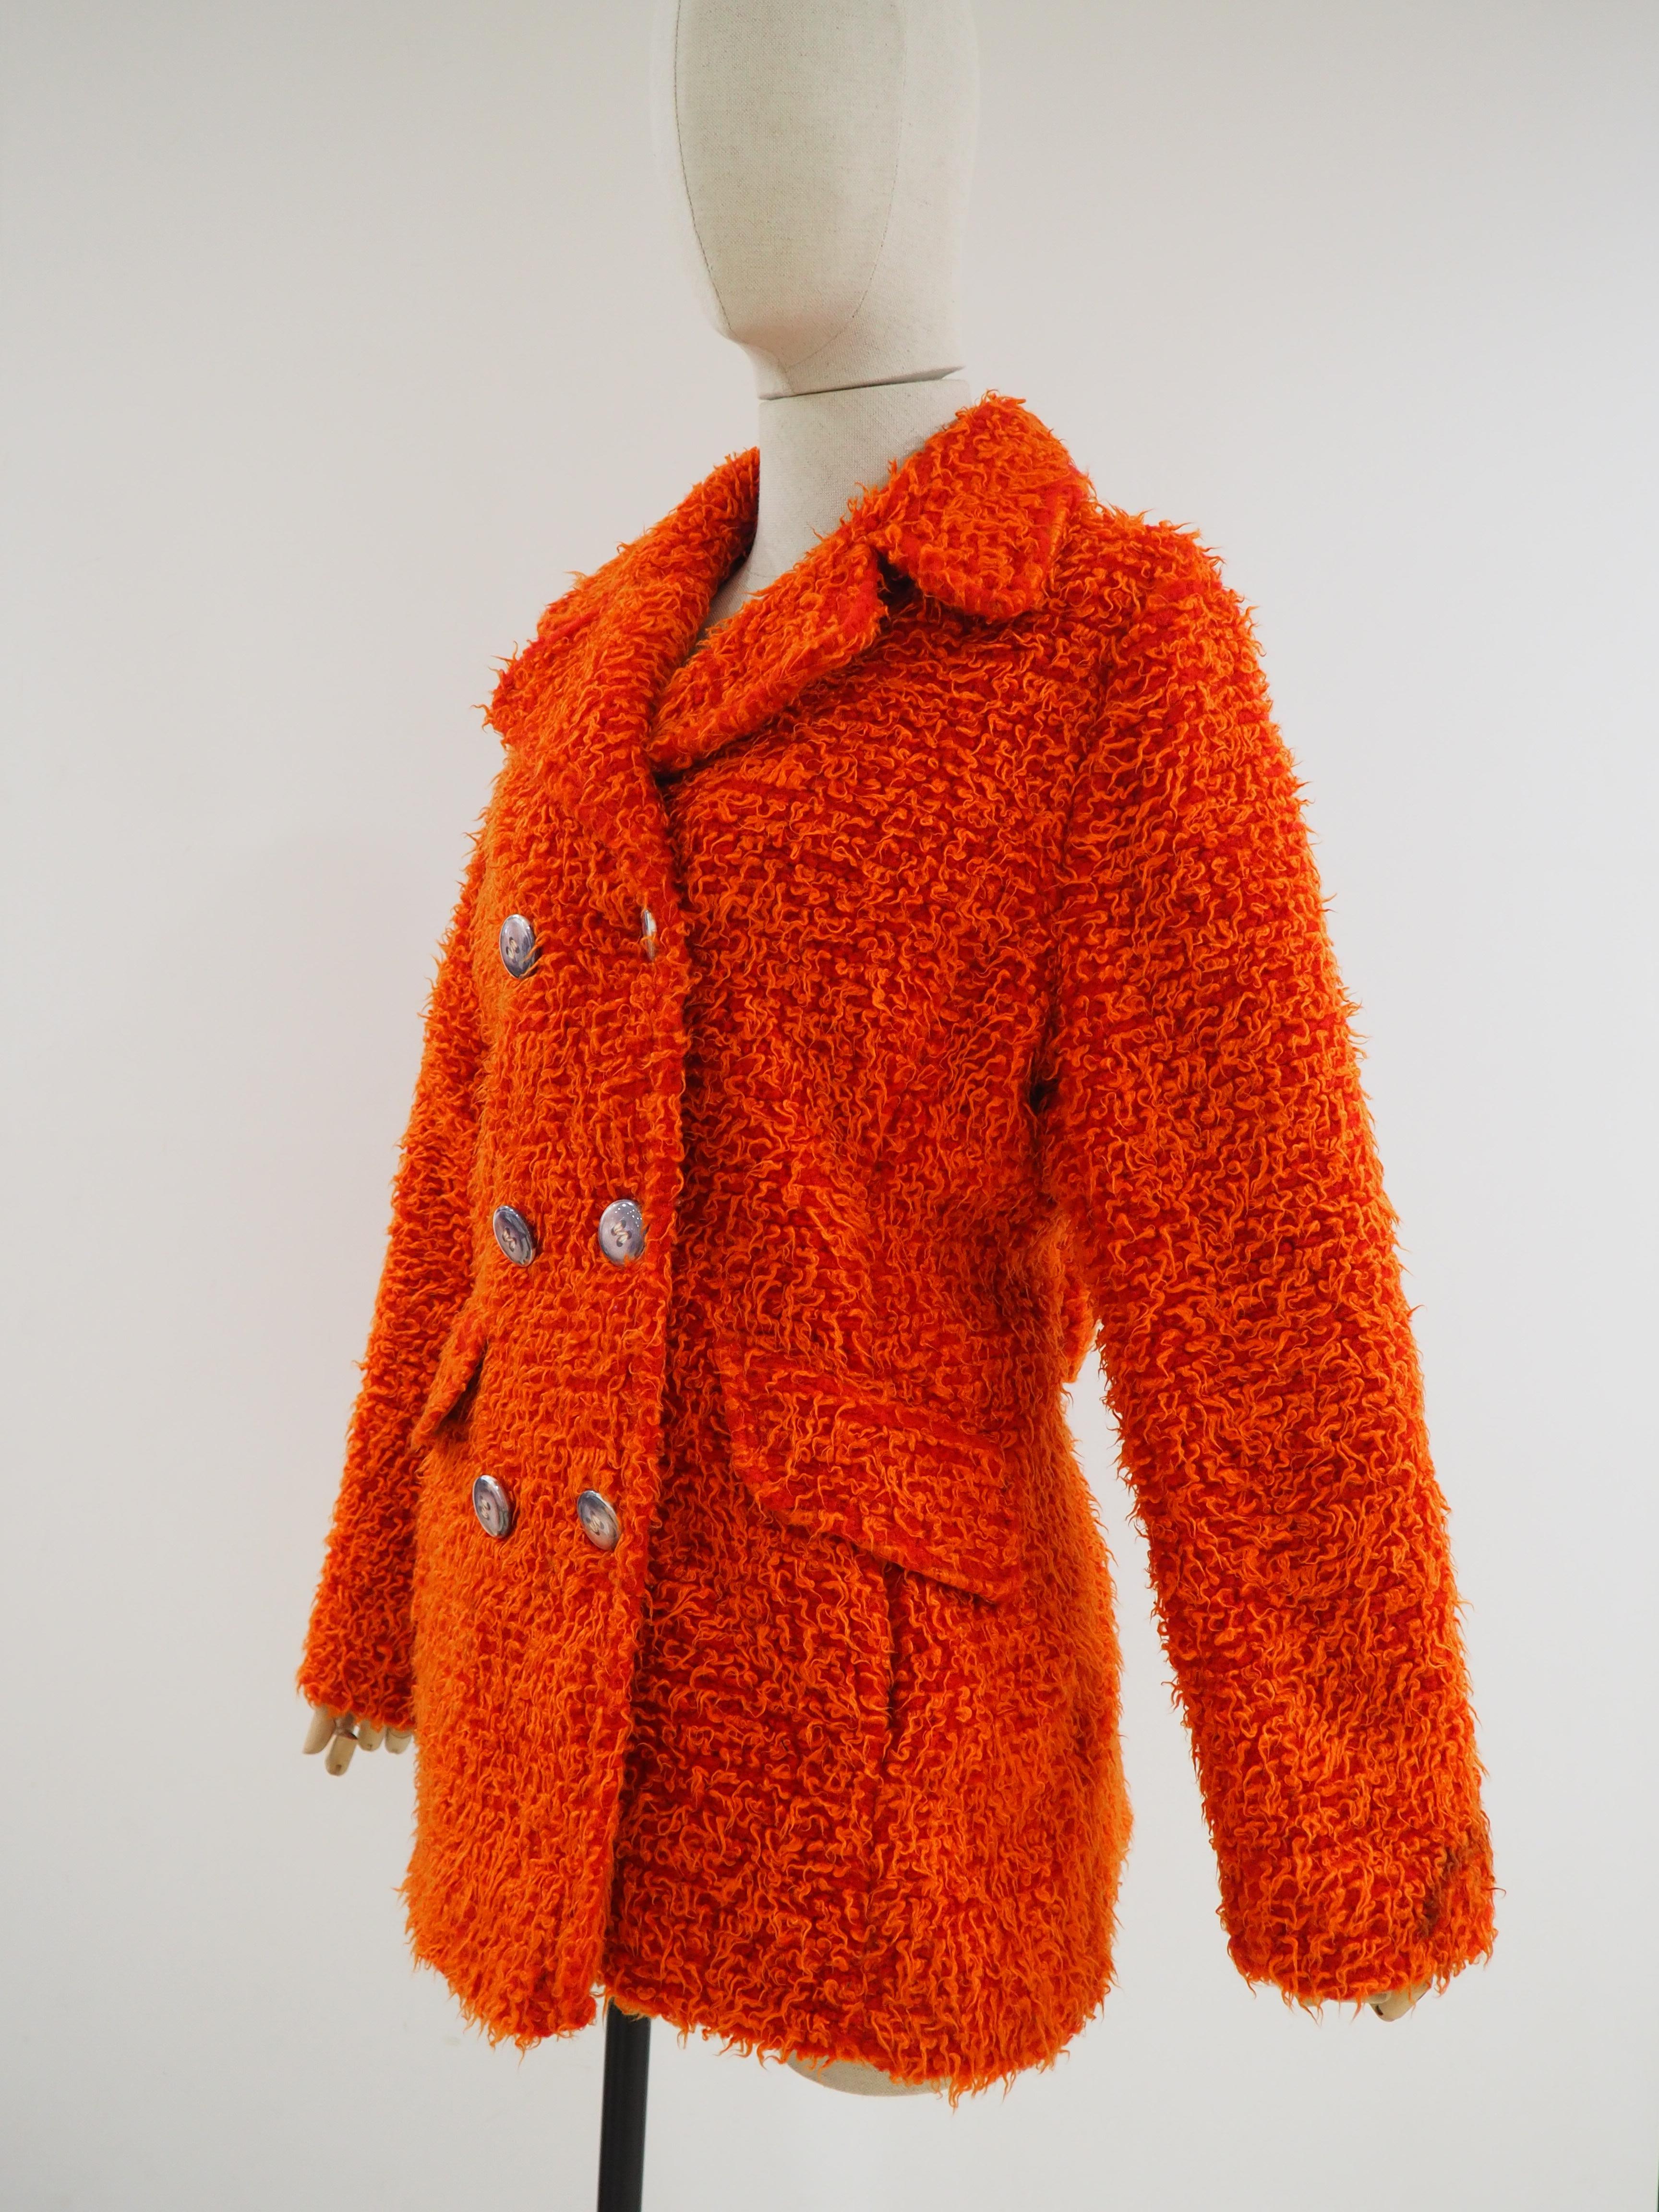 Fiorucci orange jacket
size L 
polyestere